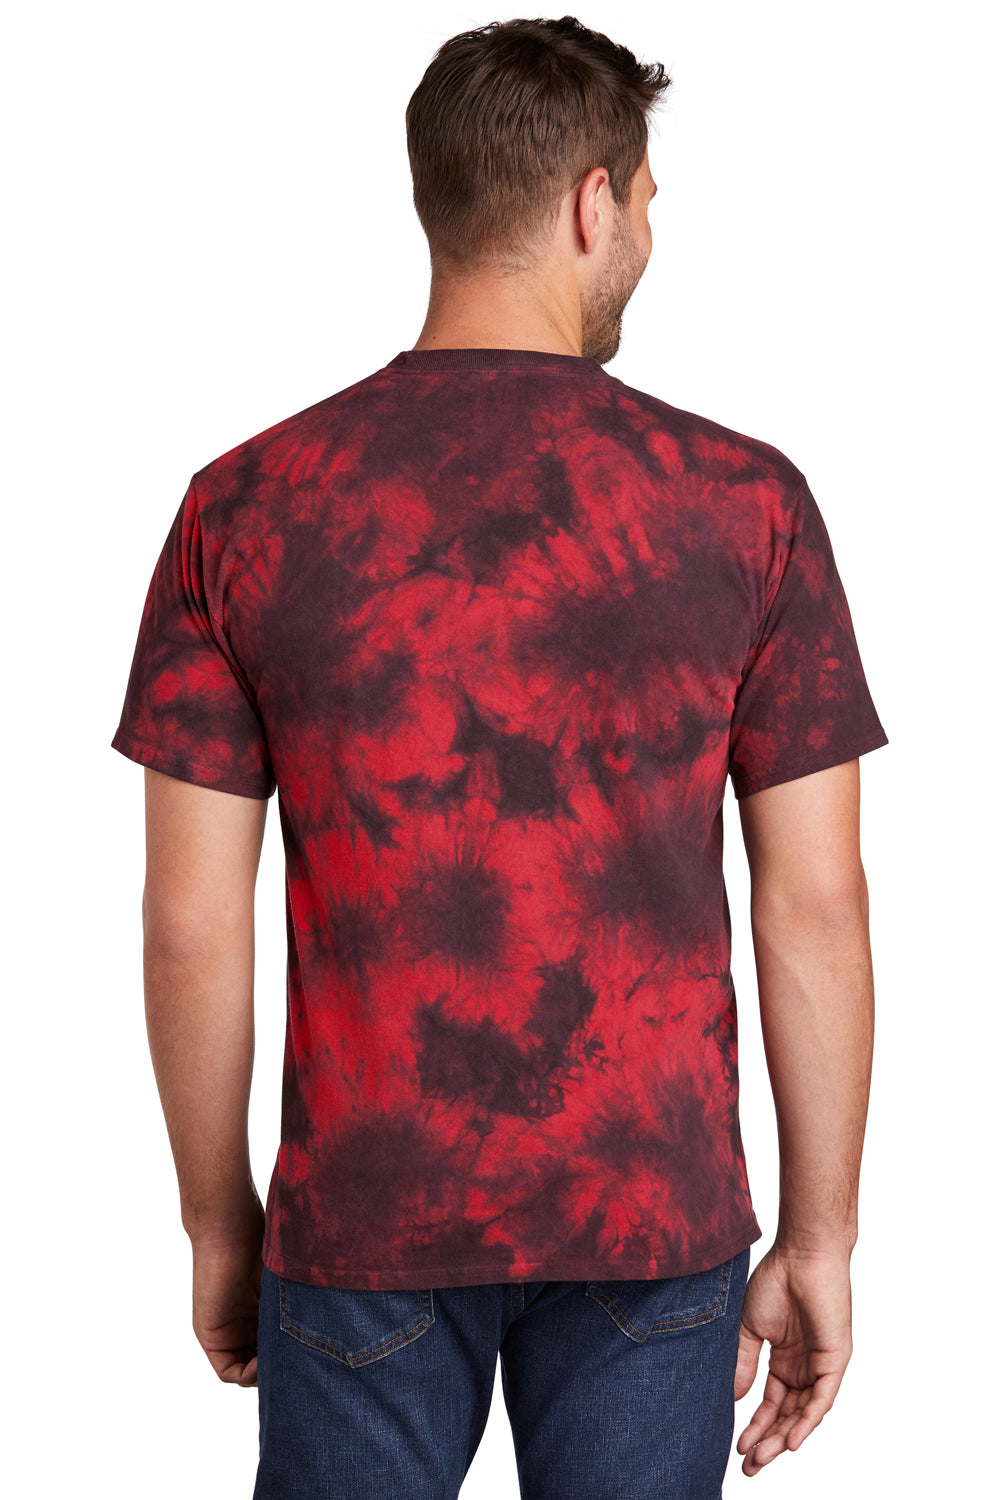 Port & Company Mens Crystal Tie-Dye Short Sleeve Crewneck T-Shirt Black/Red Side